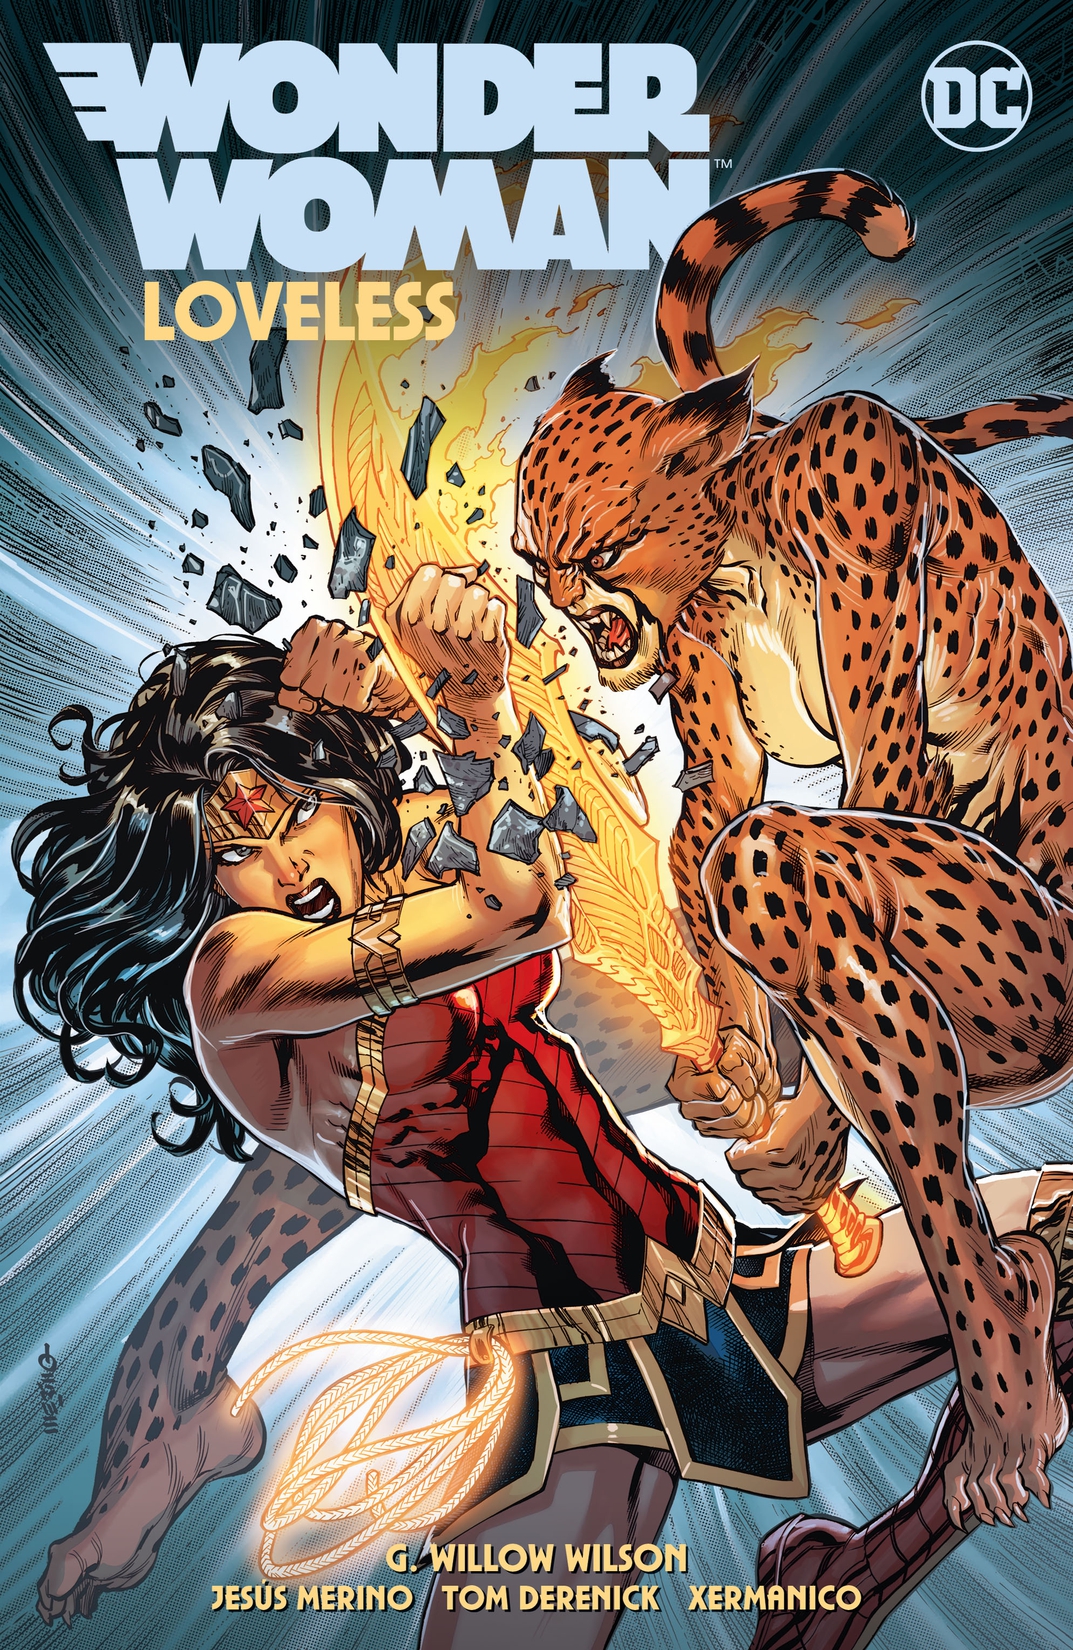 Wonder Woman Vol. 3: Loveless preview images